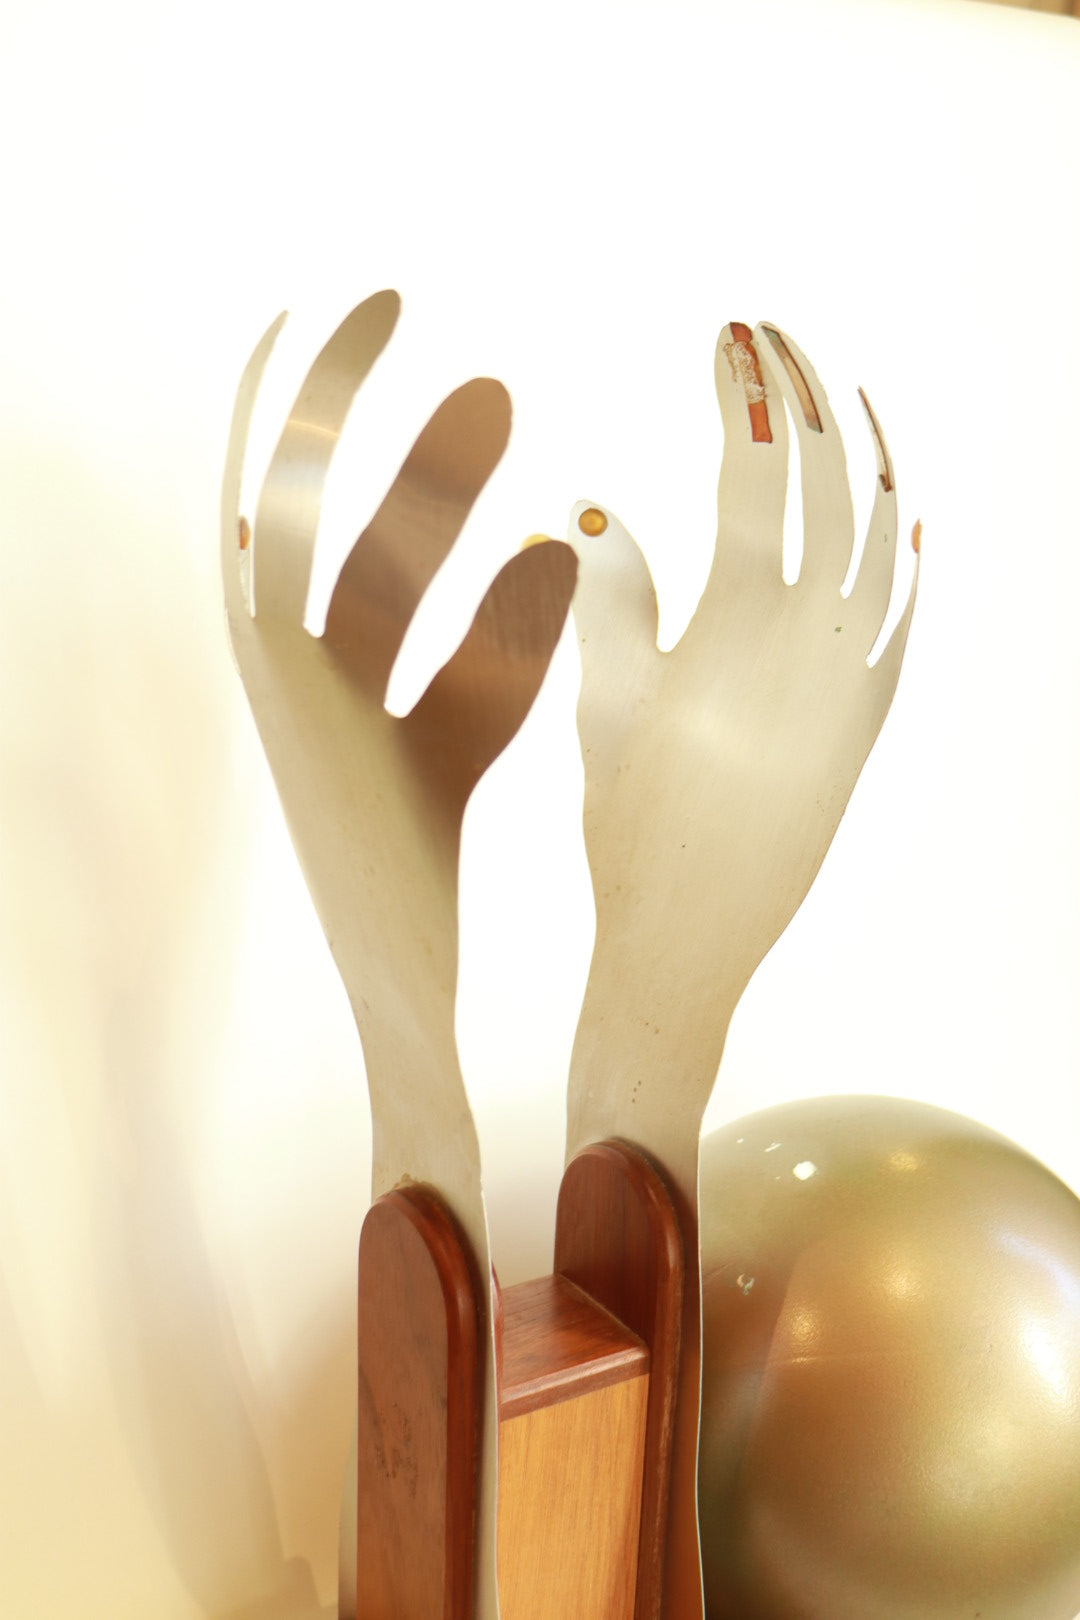 Handmade sculptural hands with sphere